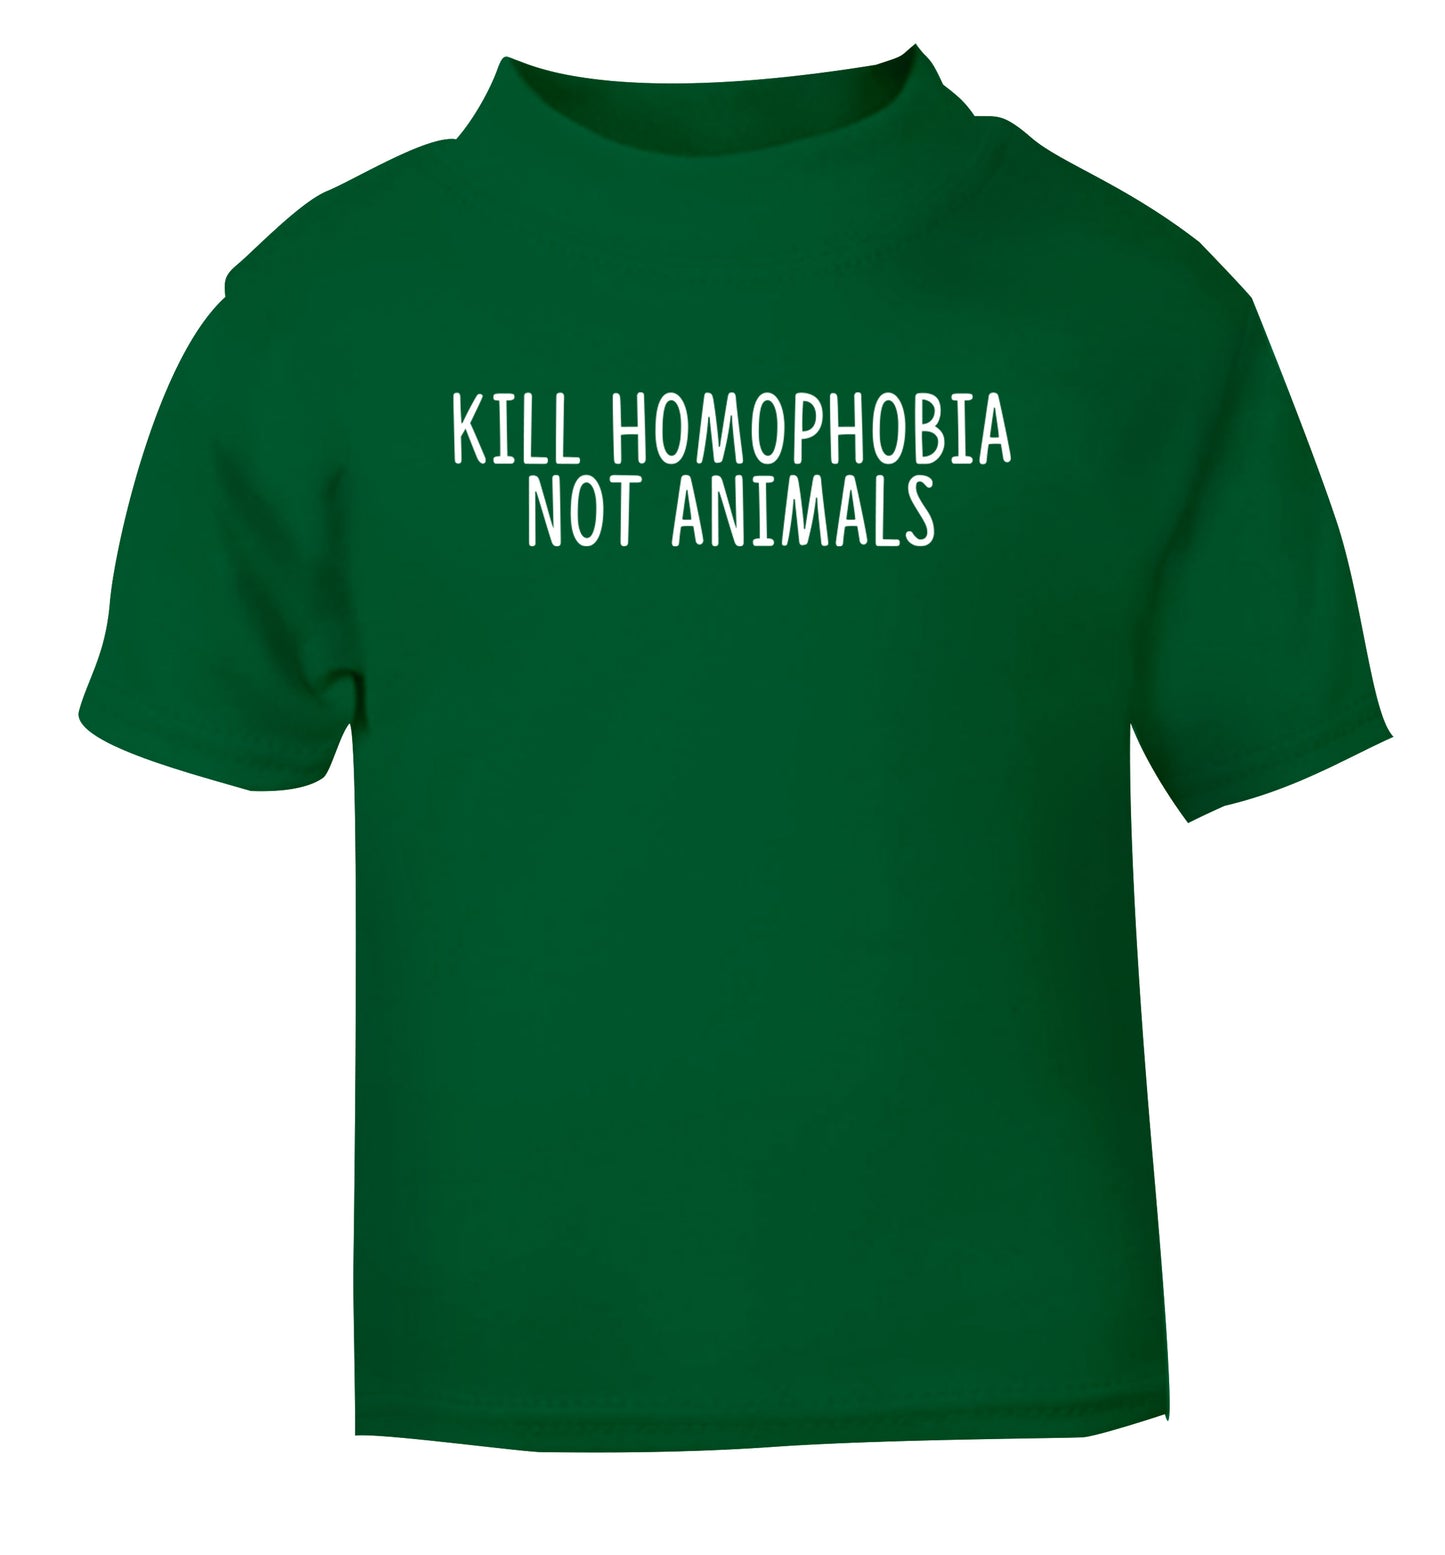 Kill Homophobia Not Animals green Baby Toddler Tshirt 2 Years